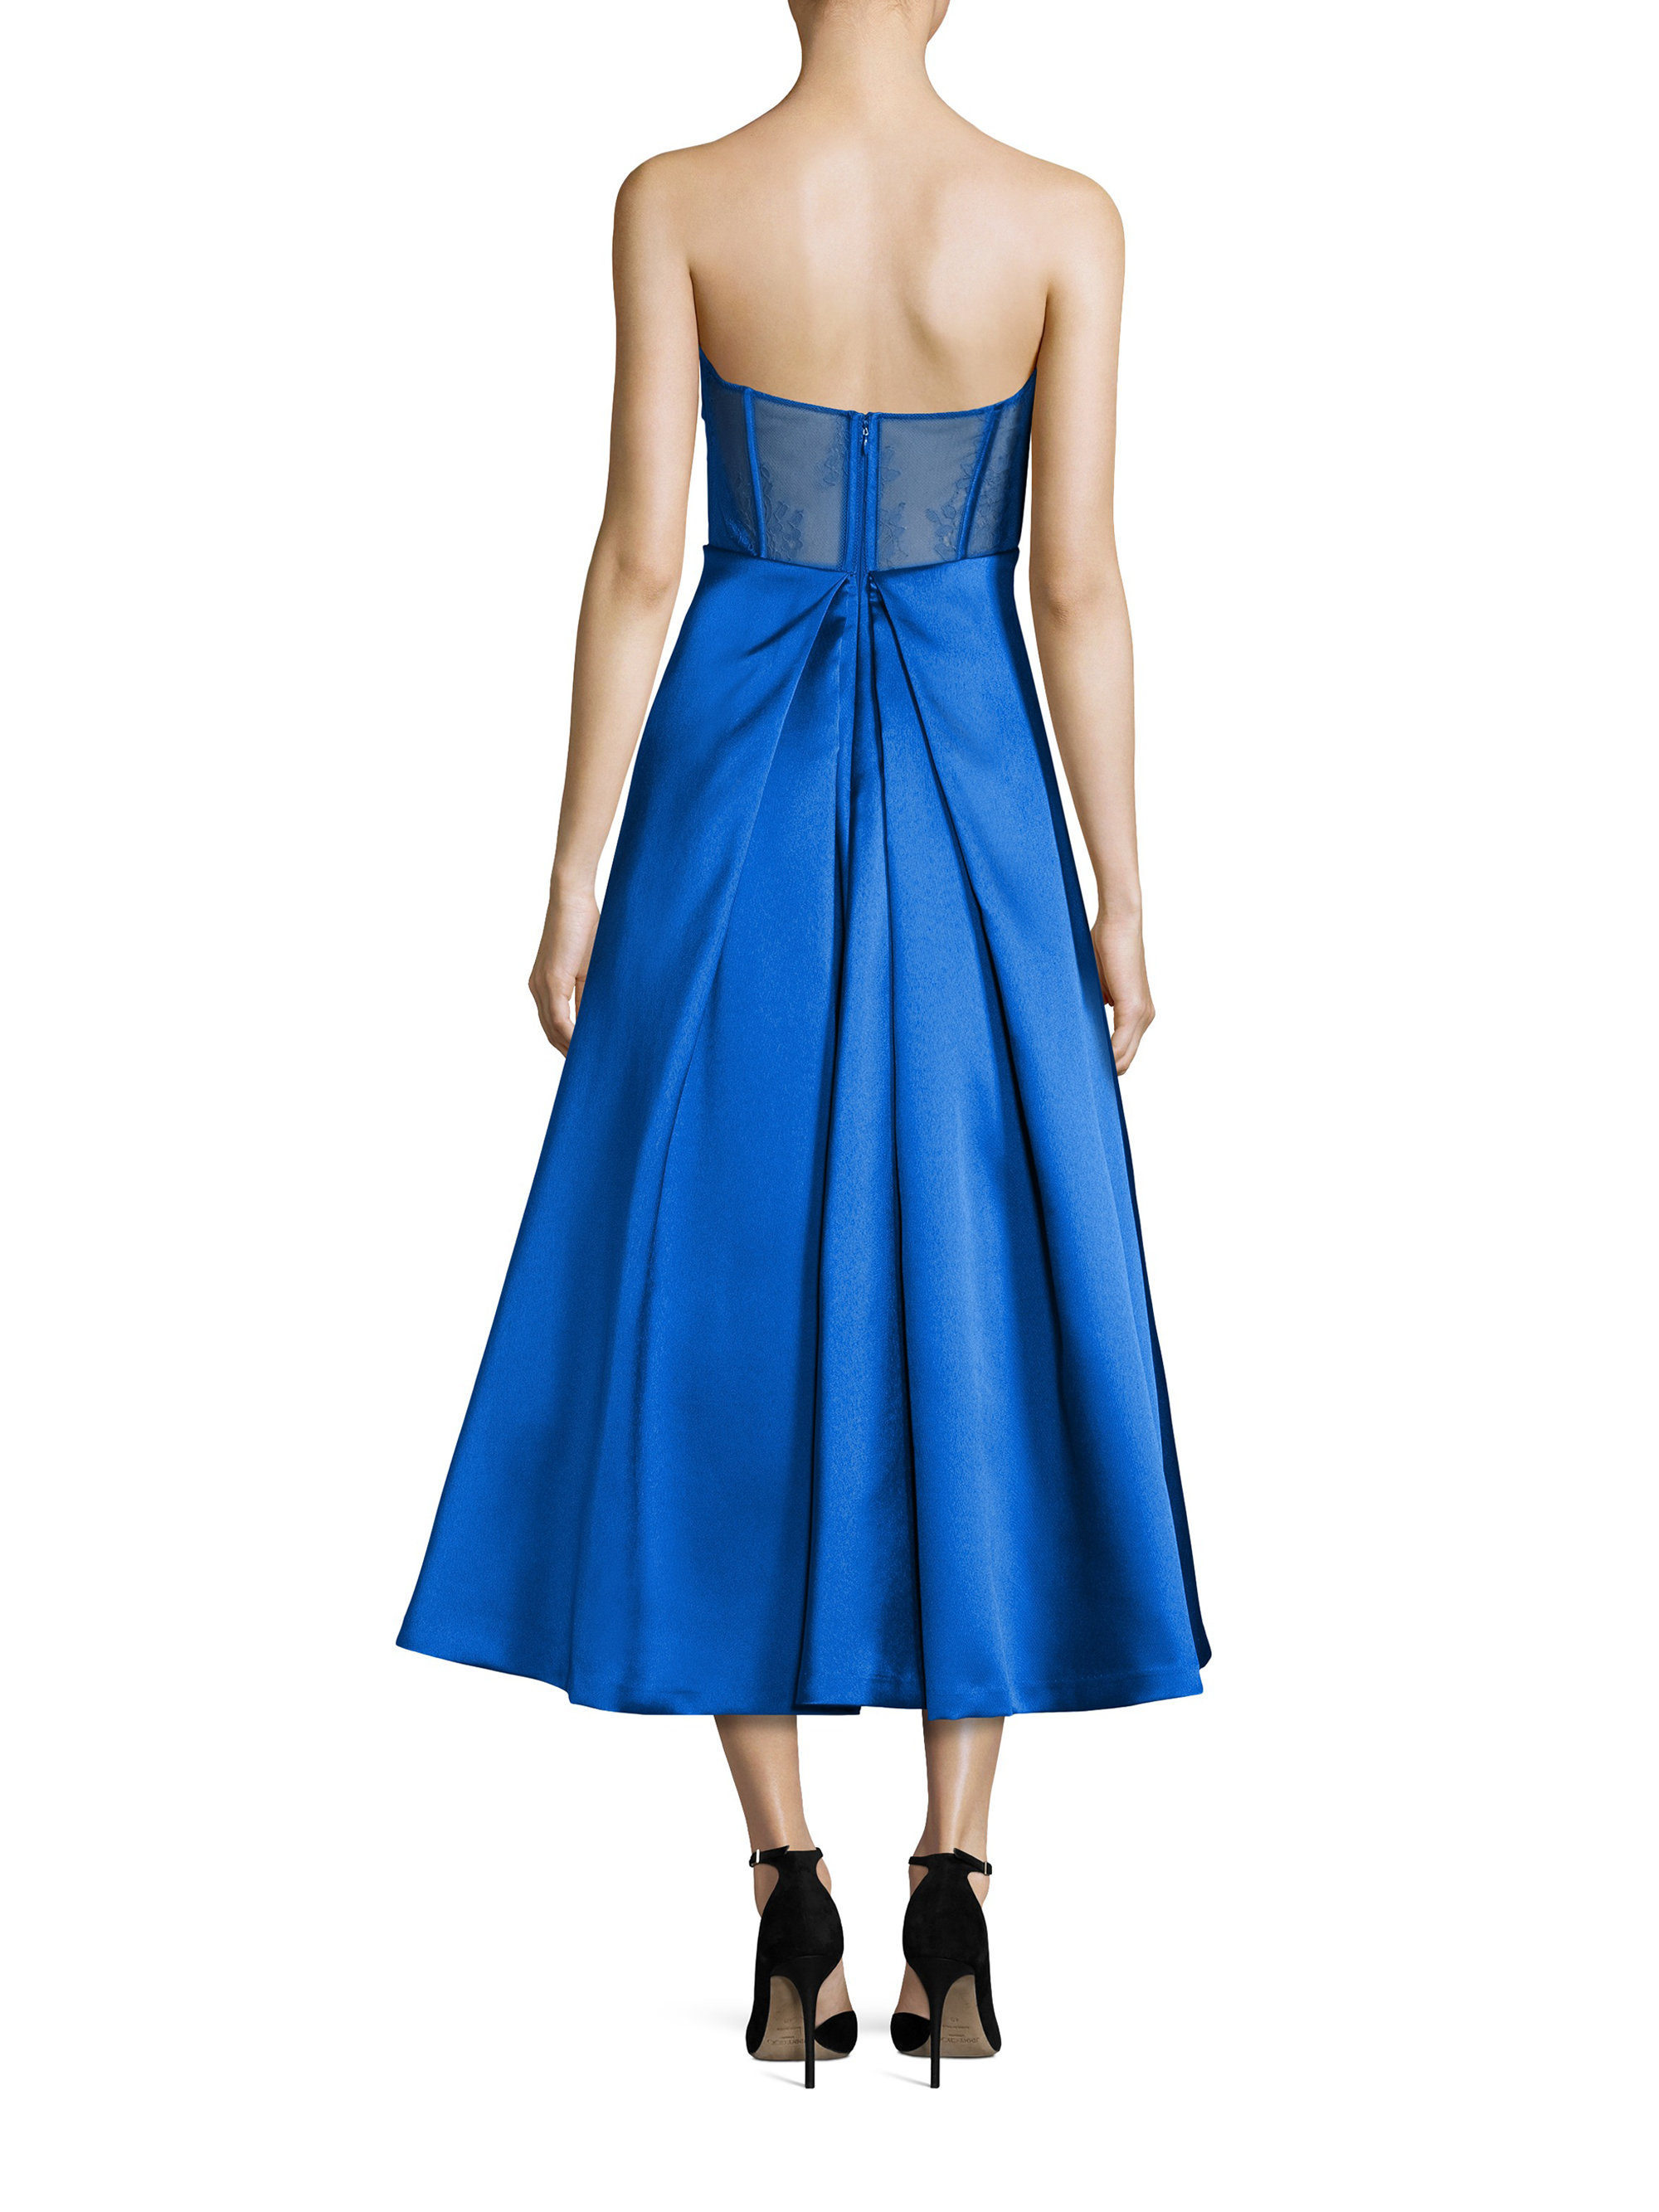 Ml monique lhuillier Lace-back Strapless Midi Dress in Blue | Lyst